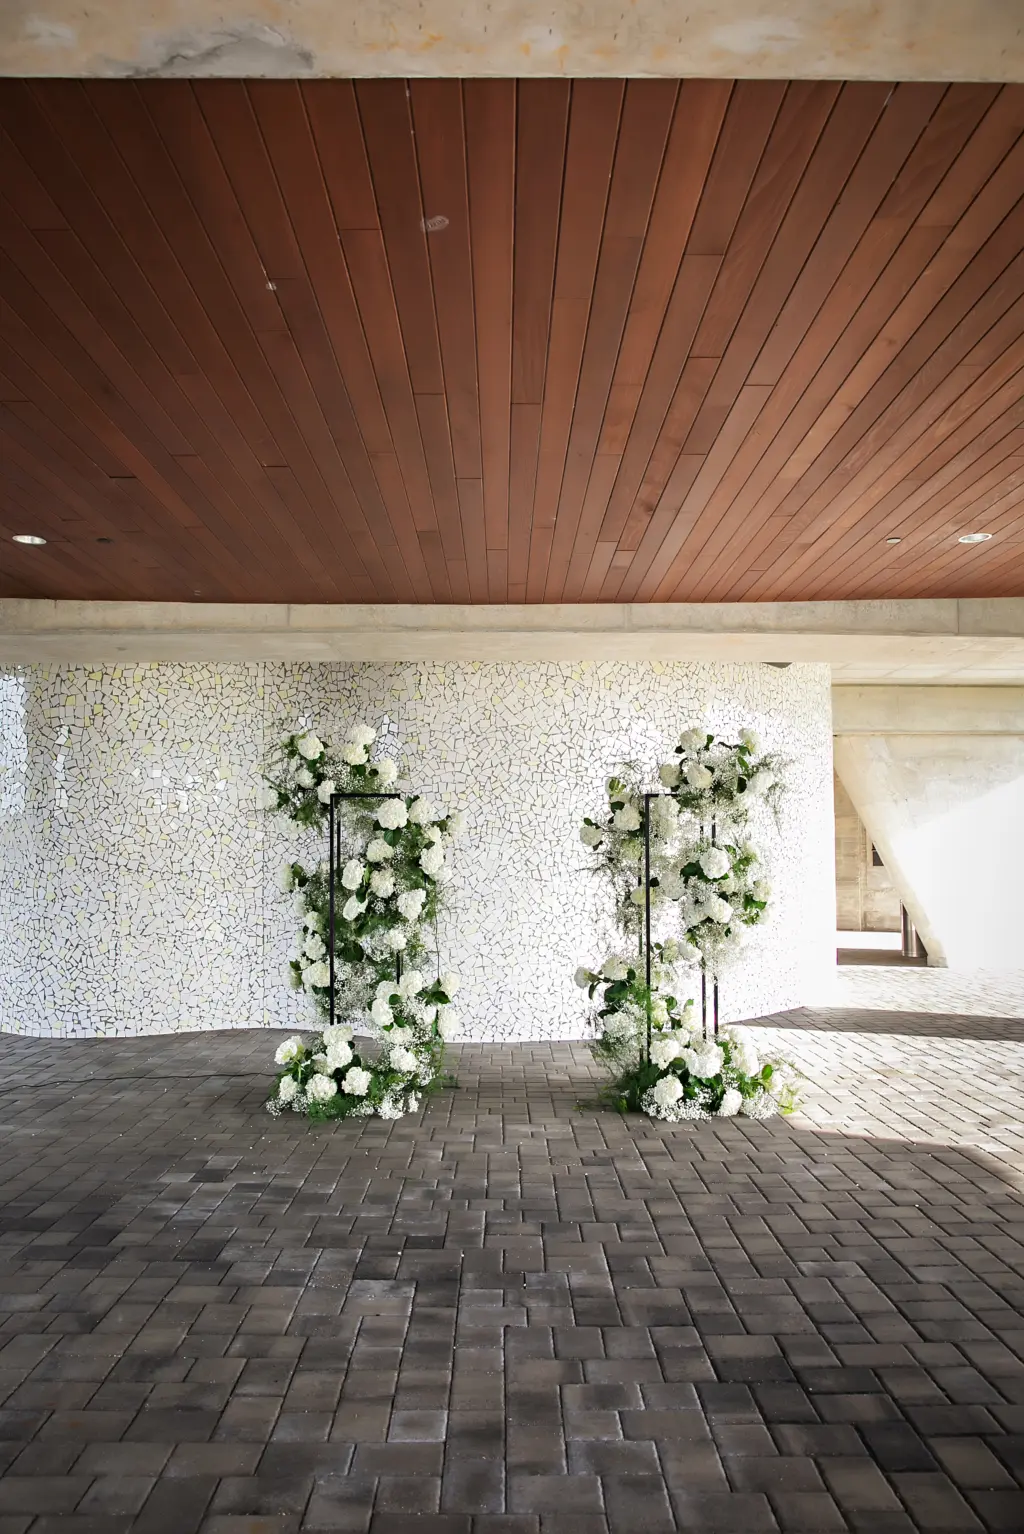 Black Metal Flower Stand with White Hydrangeas, Baby's Breath, and Greenery | Modern Wedding Ceremony Altar Decor Ideas